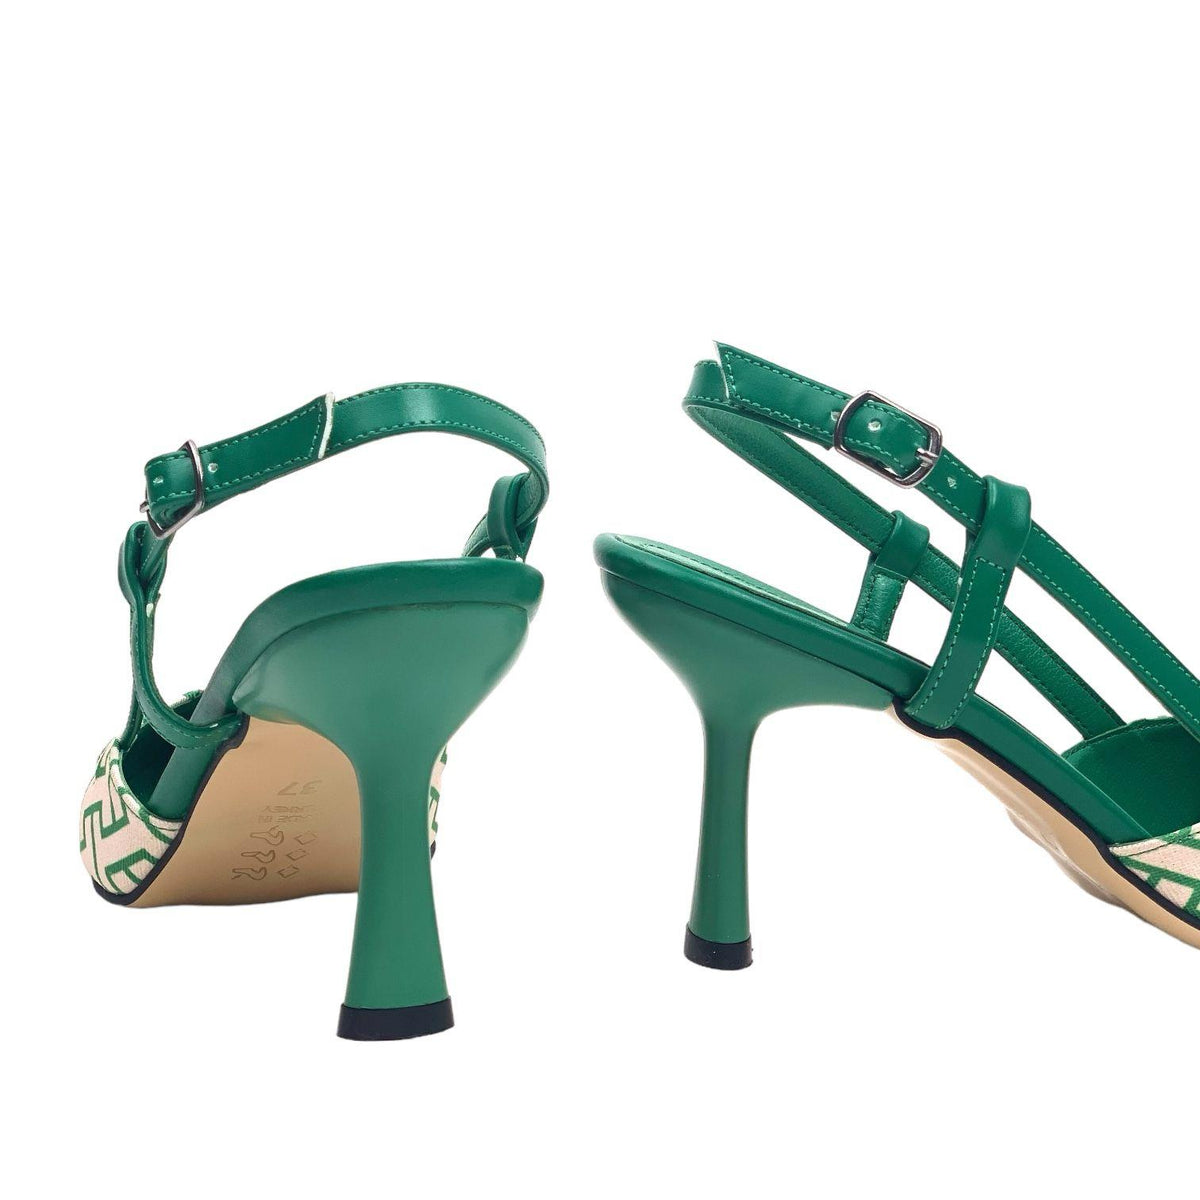 Women's Yurba Green Thin Heel Textile Sandals 8 cm - STREETMODE ™